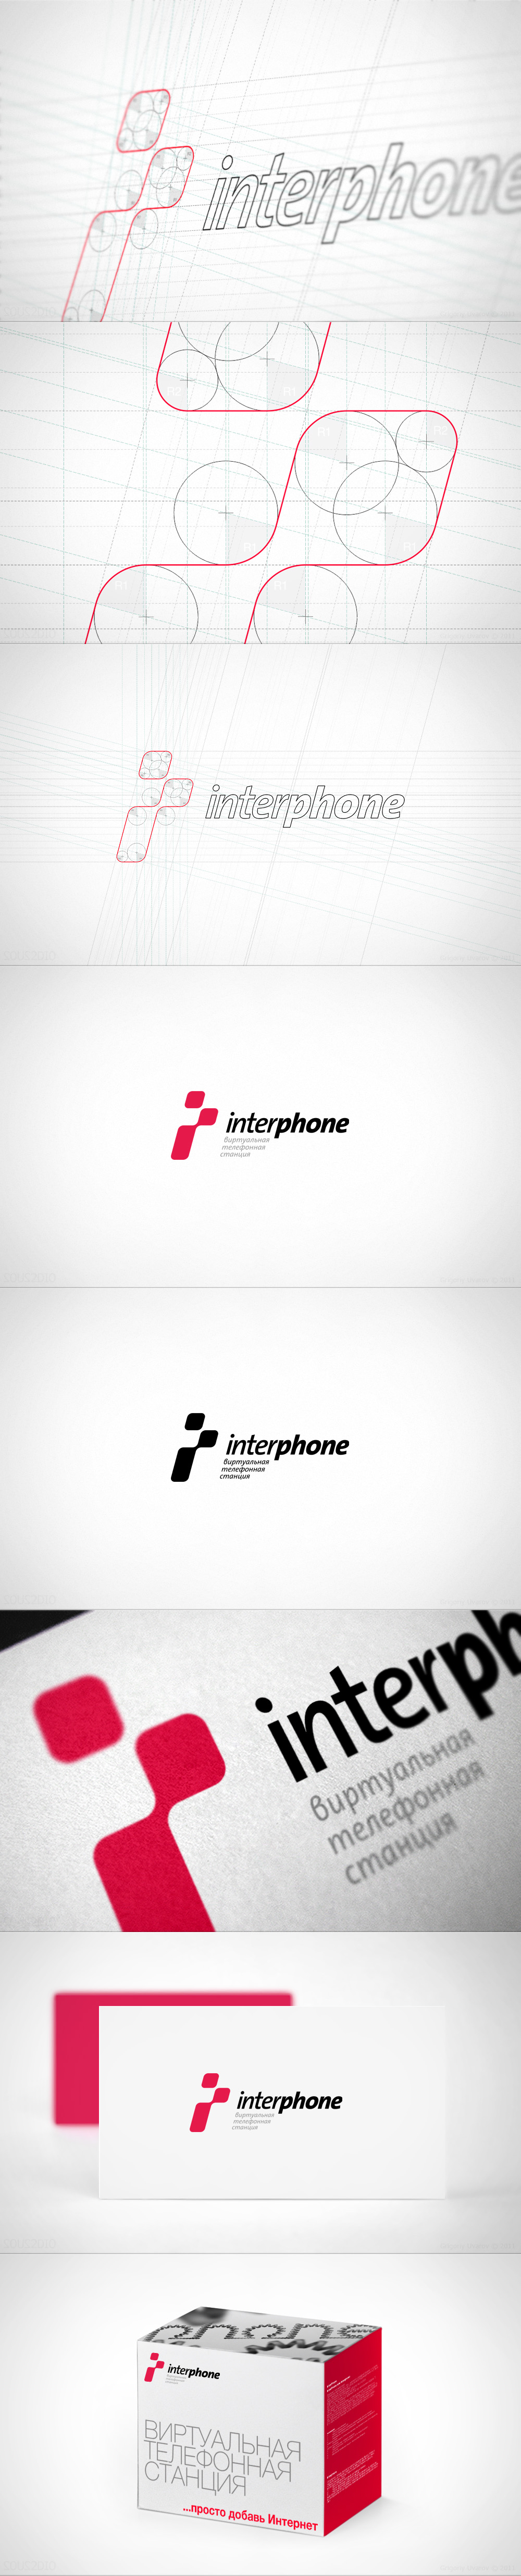 InterPhone